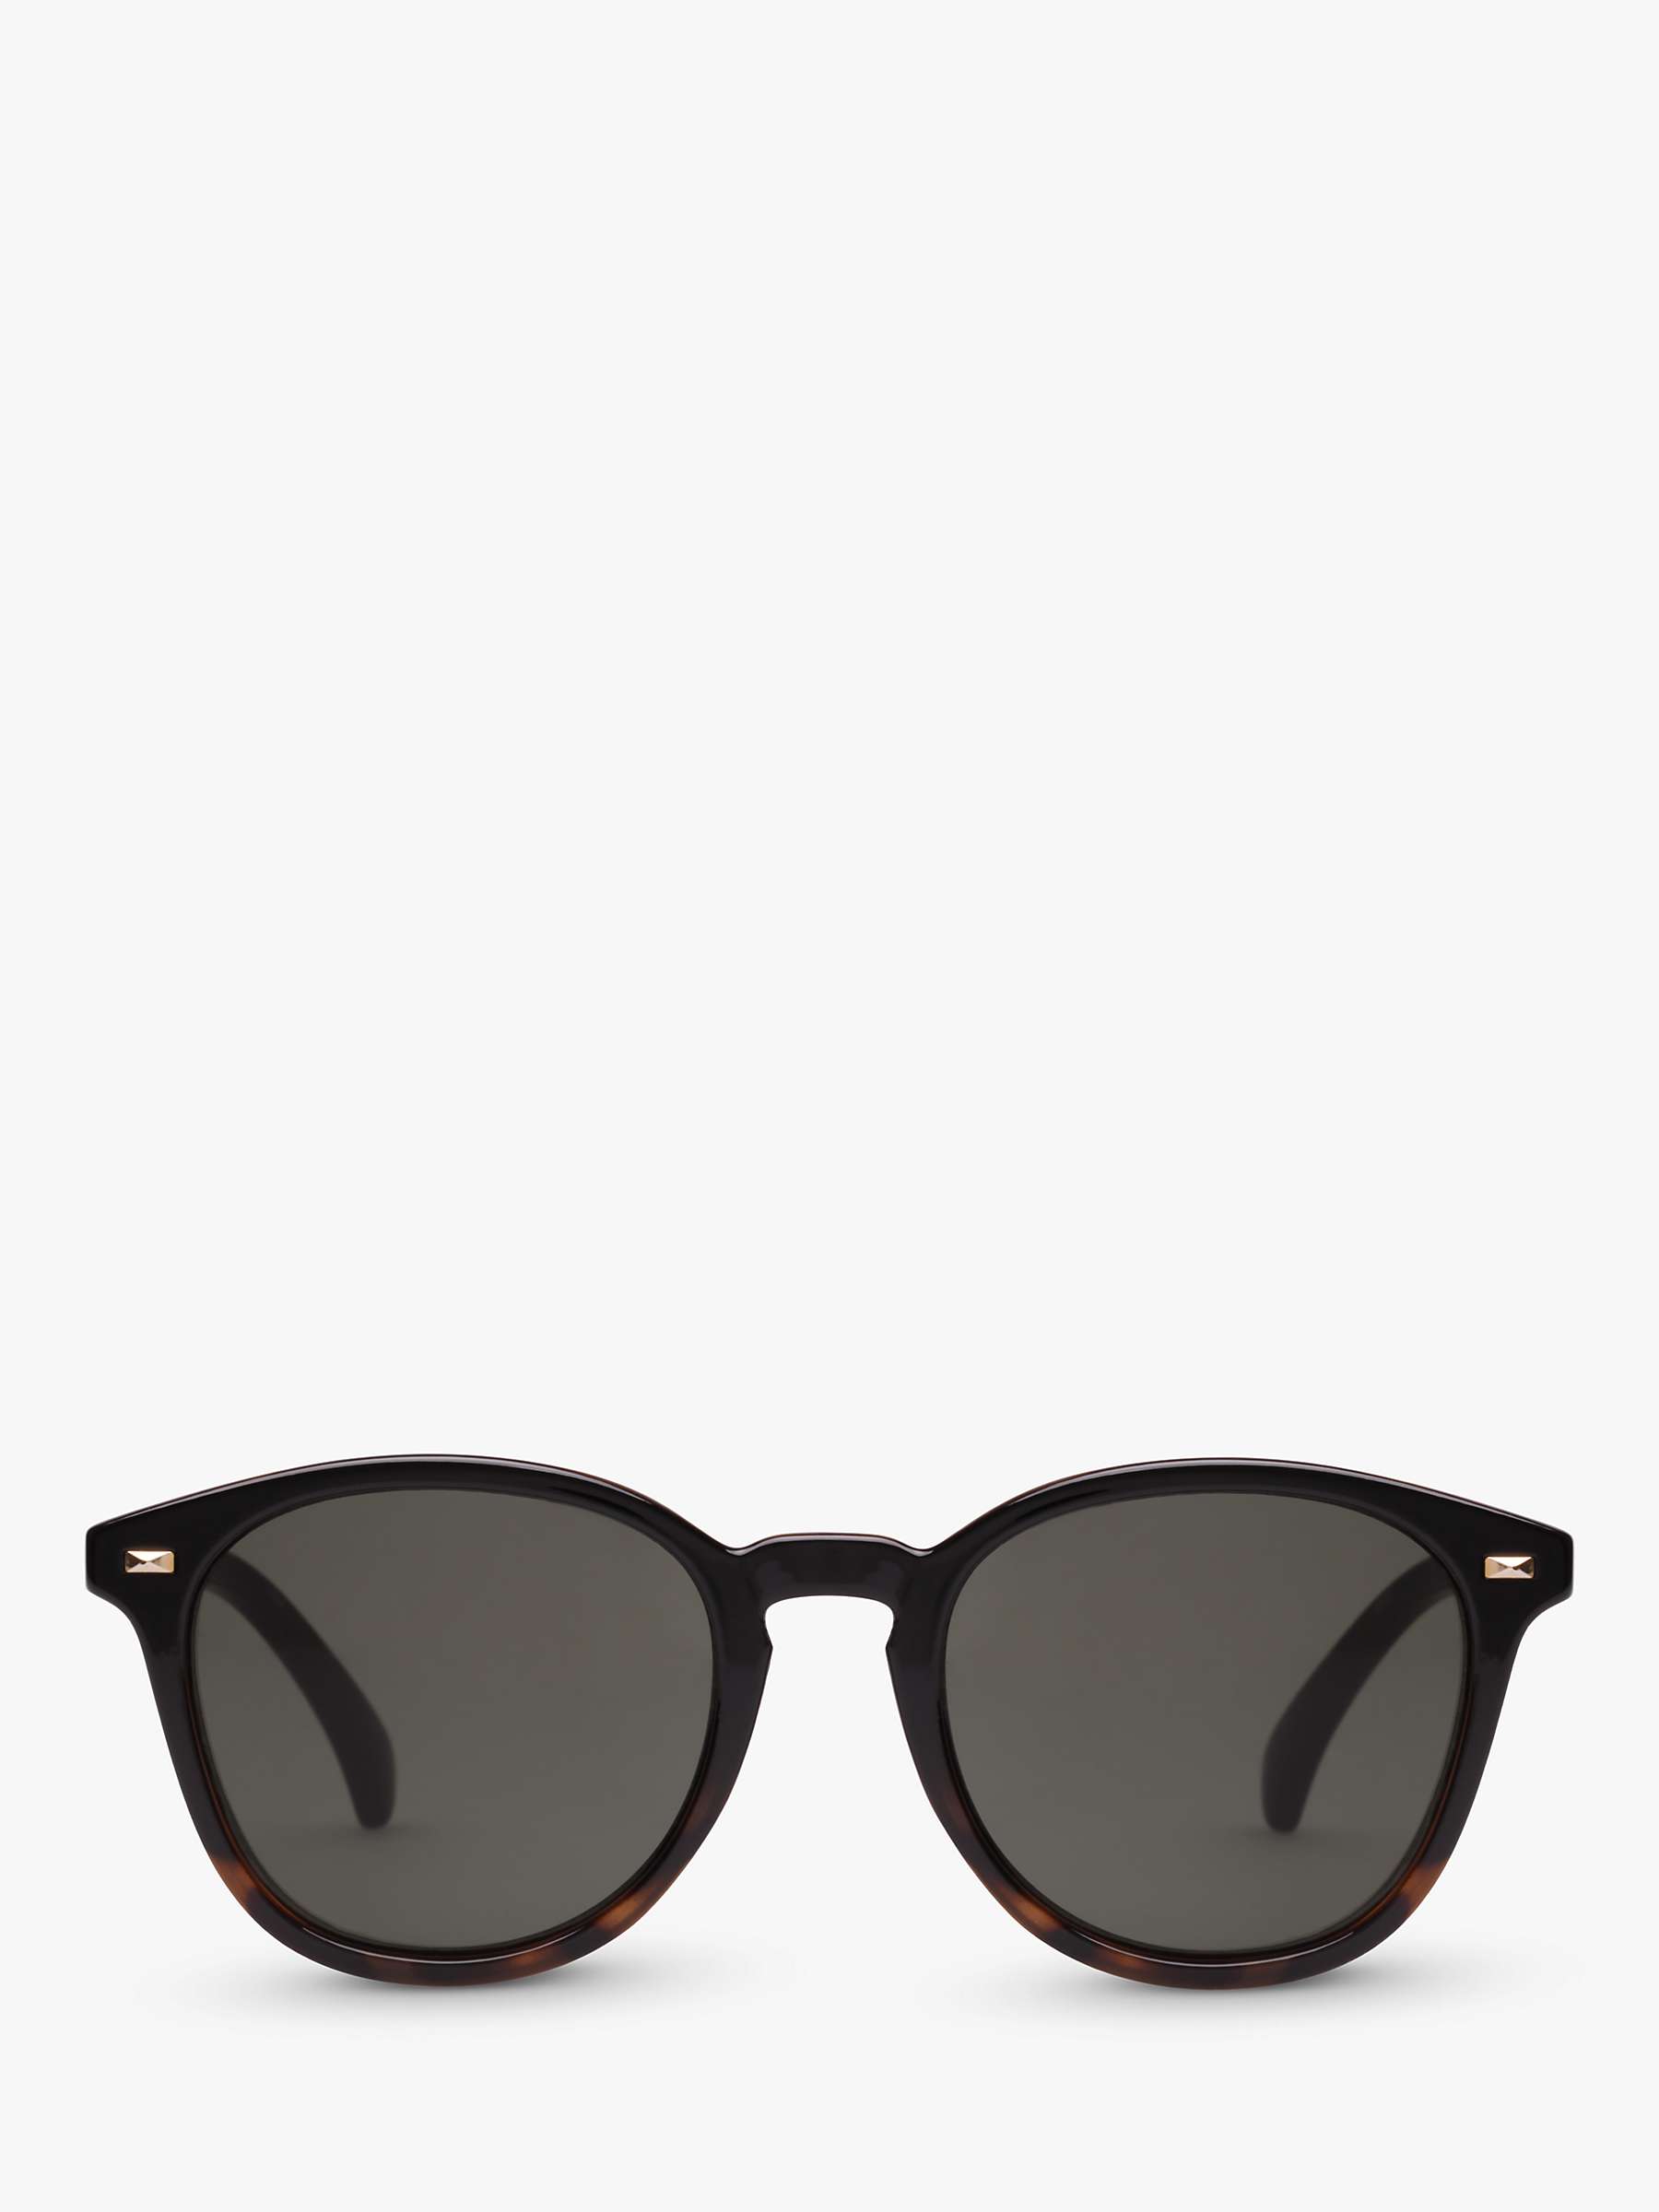 Le Specs Unisex Bandwagon Round Sunglasses, Tortoise/Grey L5000166 at ...